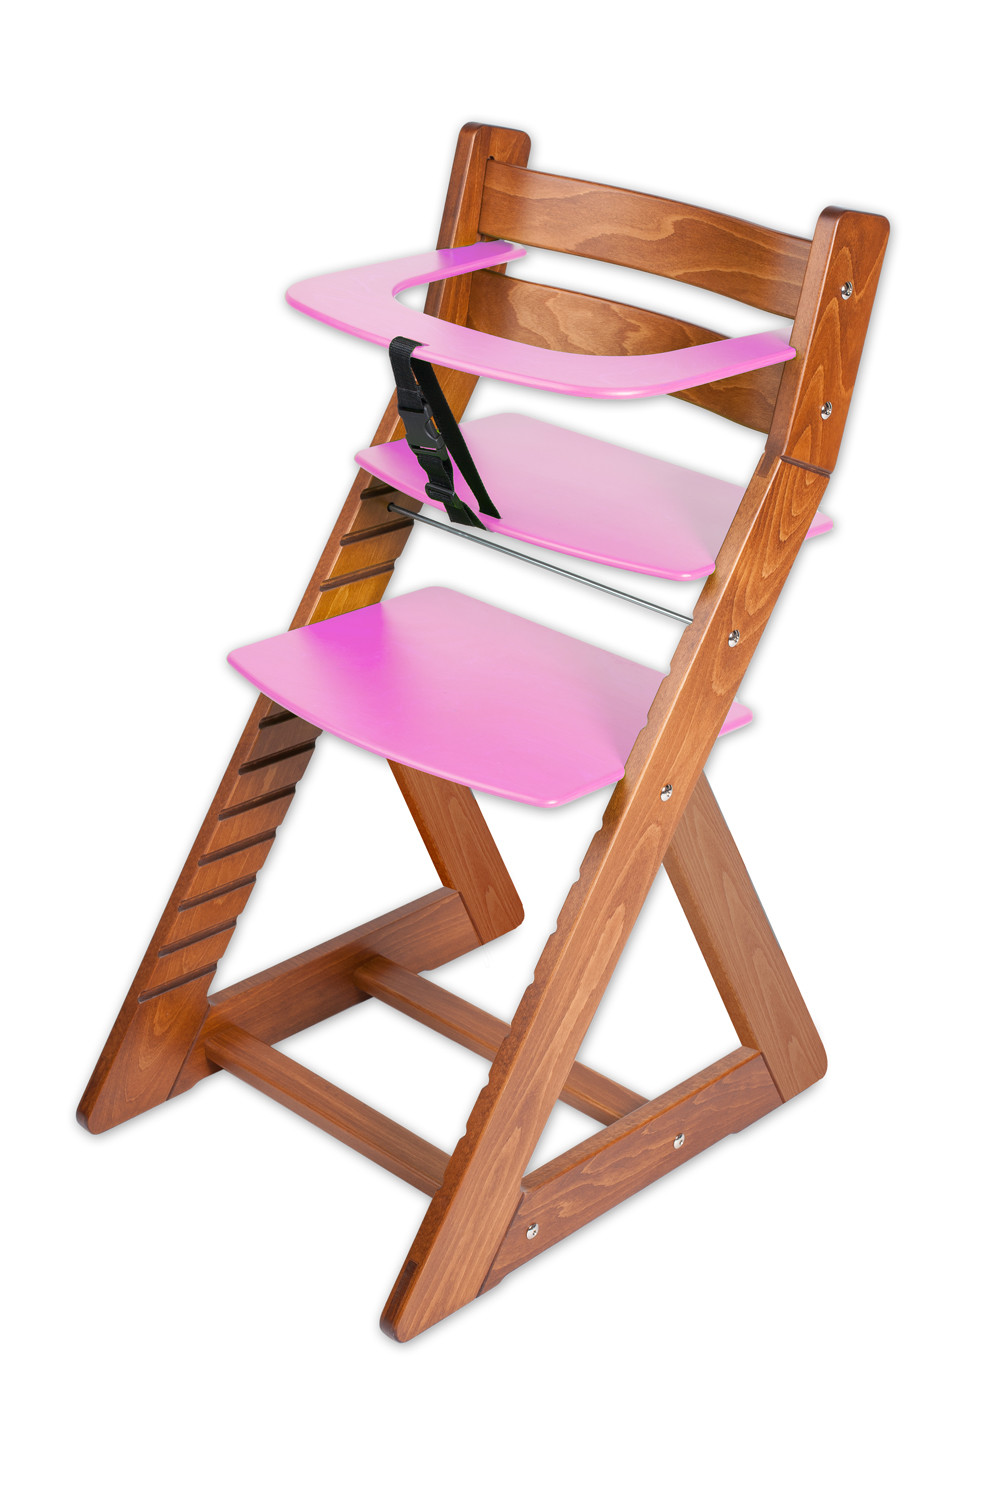 Hajdalánek Rostoucí židle ANETA - malý pultík (dub tmavý, růžová)